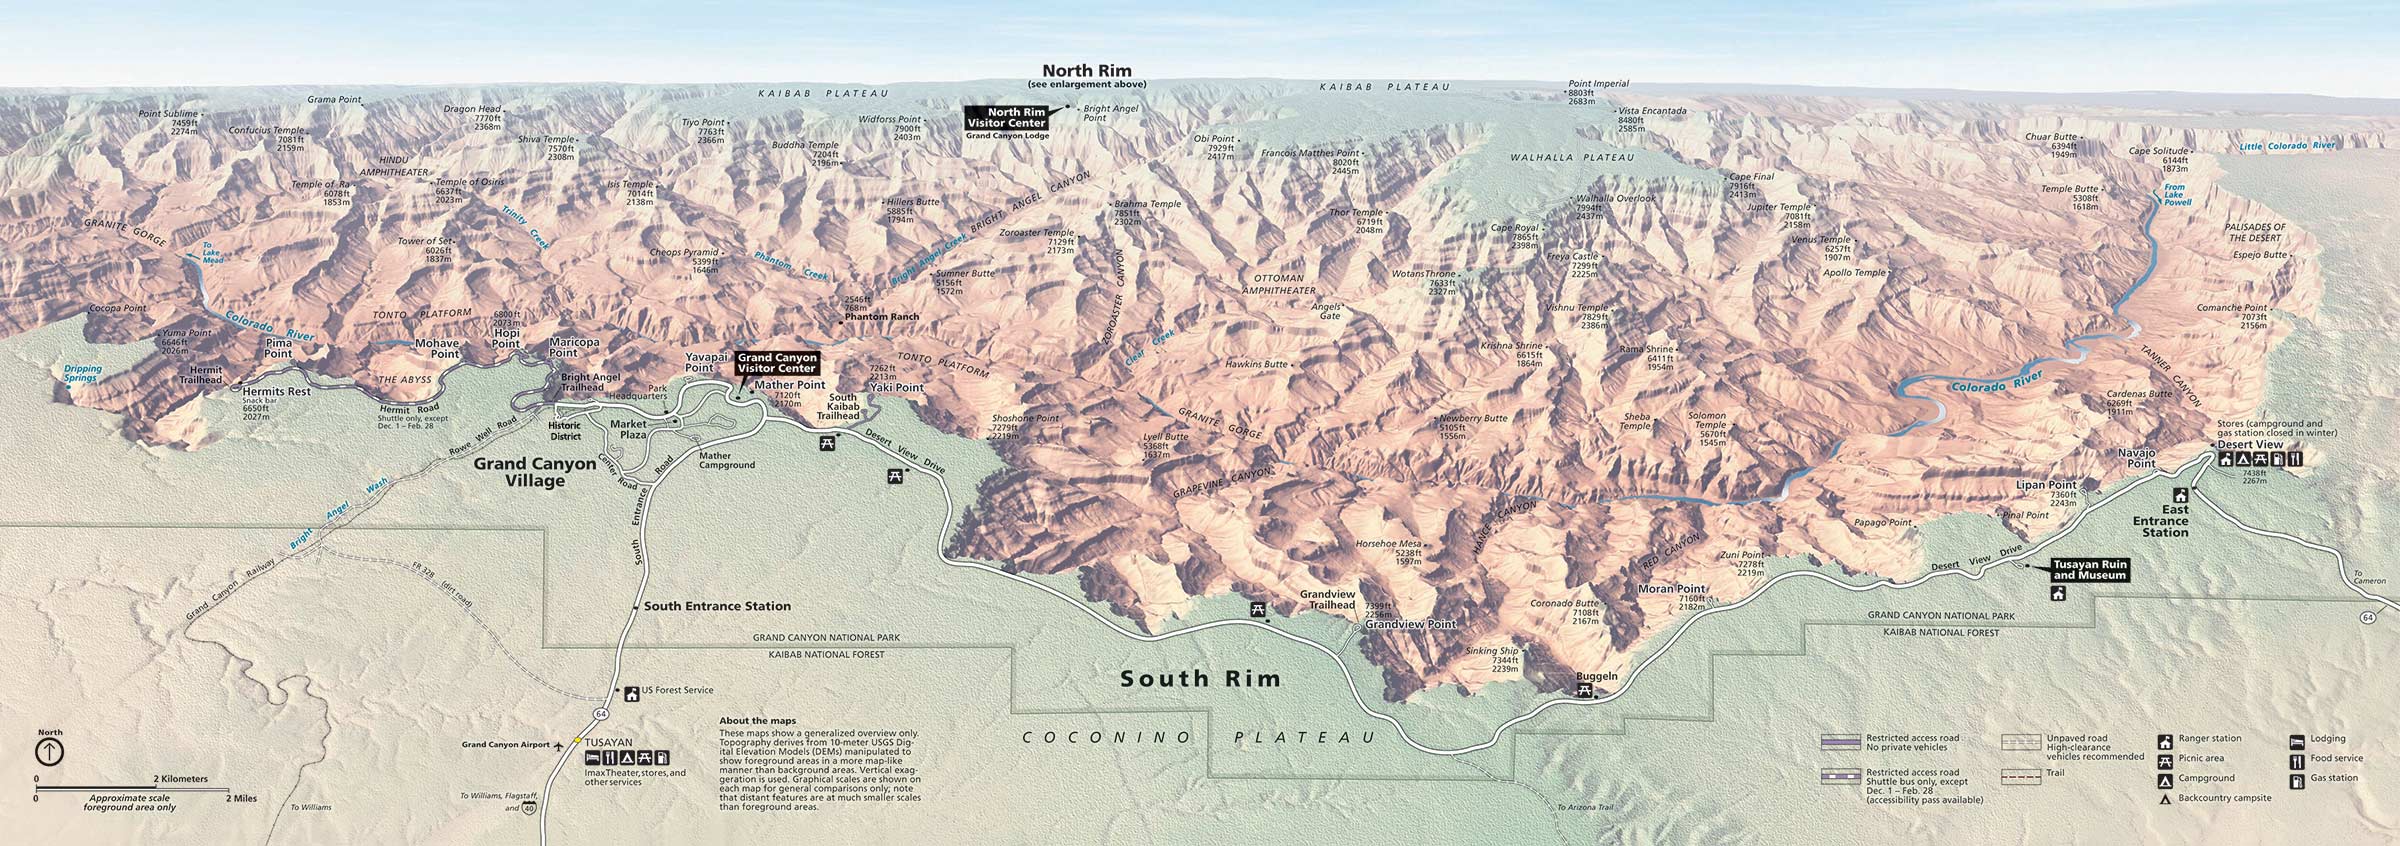 Grand Canyon National Park Maps Maps   Grand Canyon National Park (U.S. National Park Service)